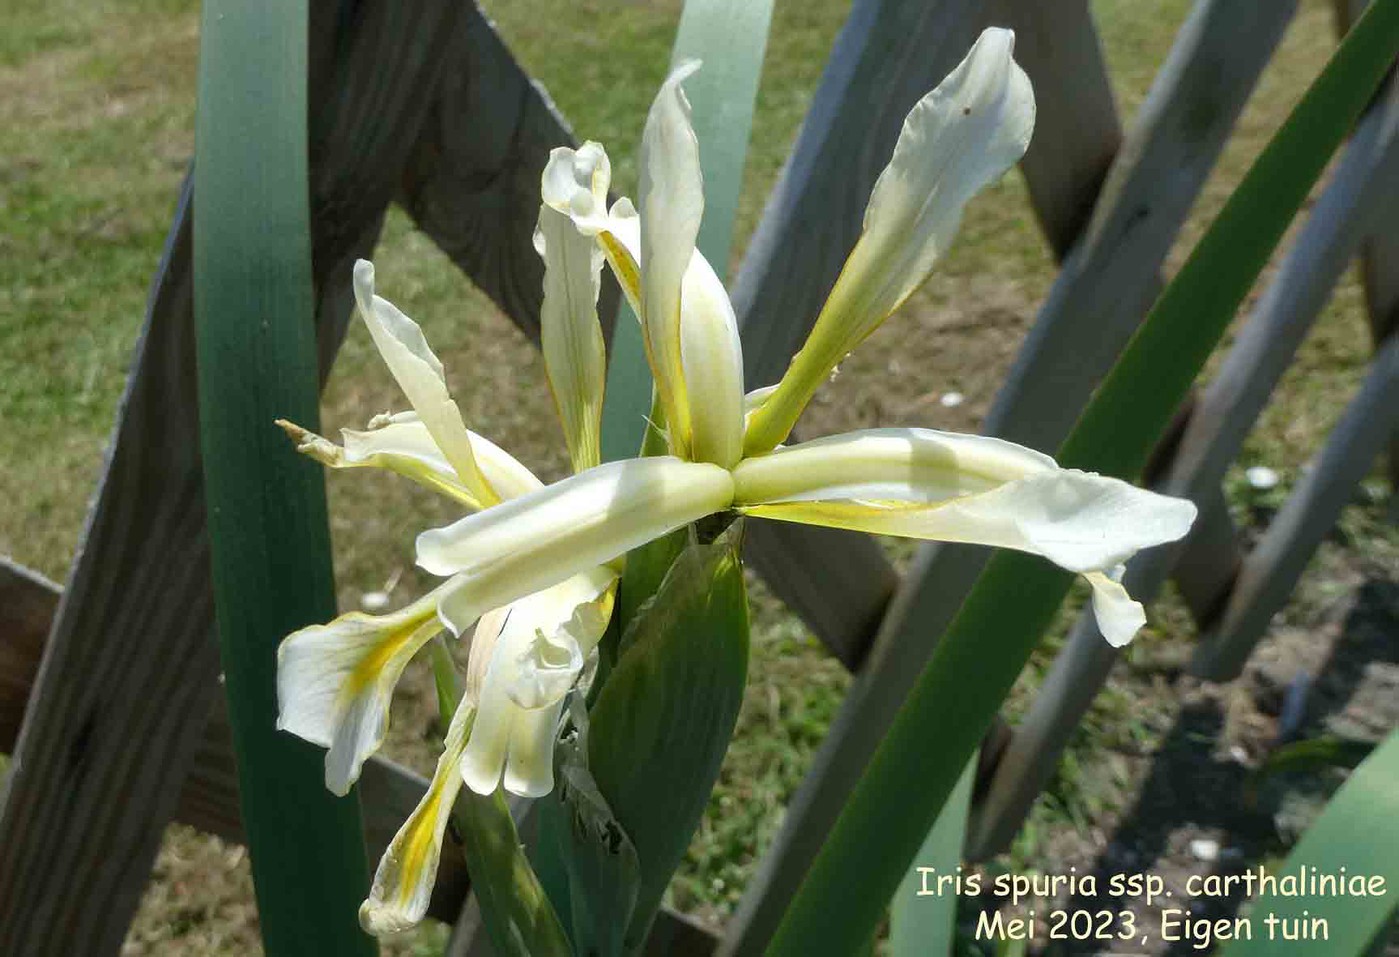 Iris spuria ssp. carthaliniae